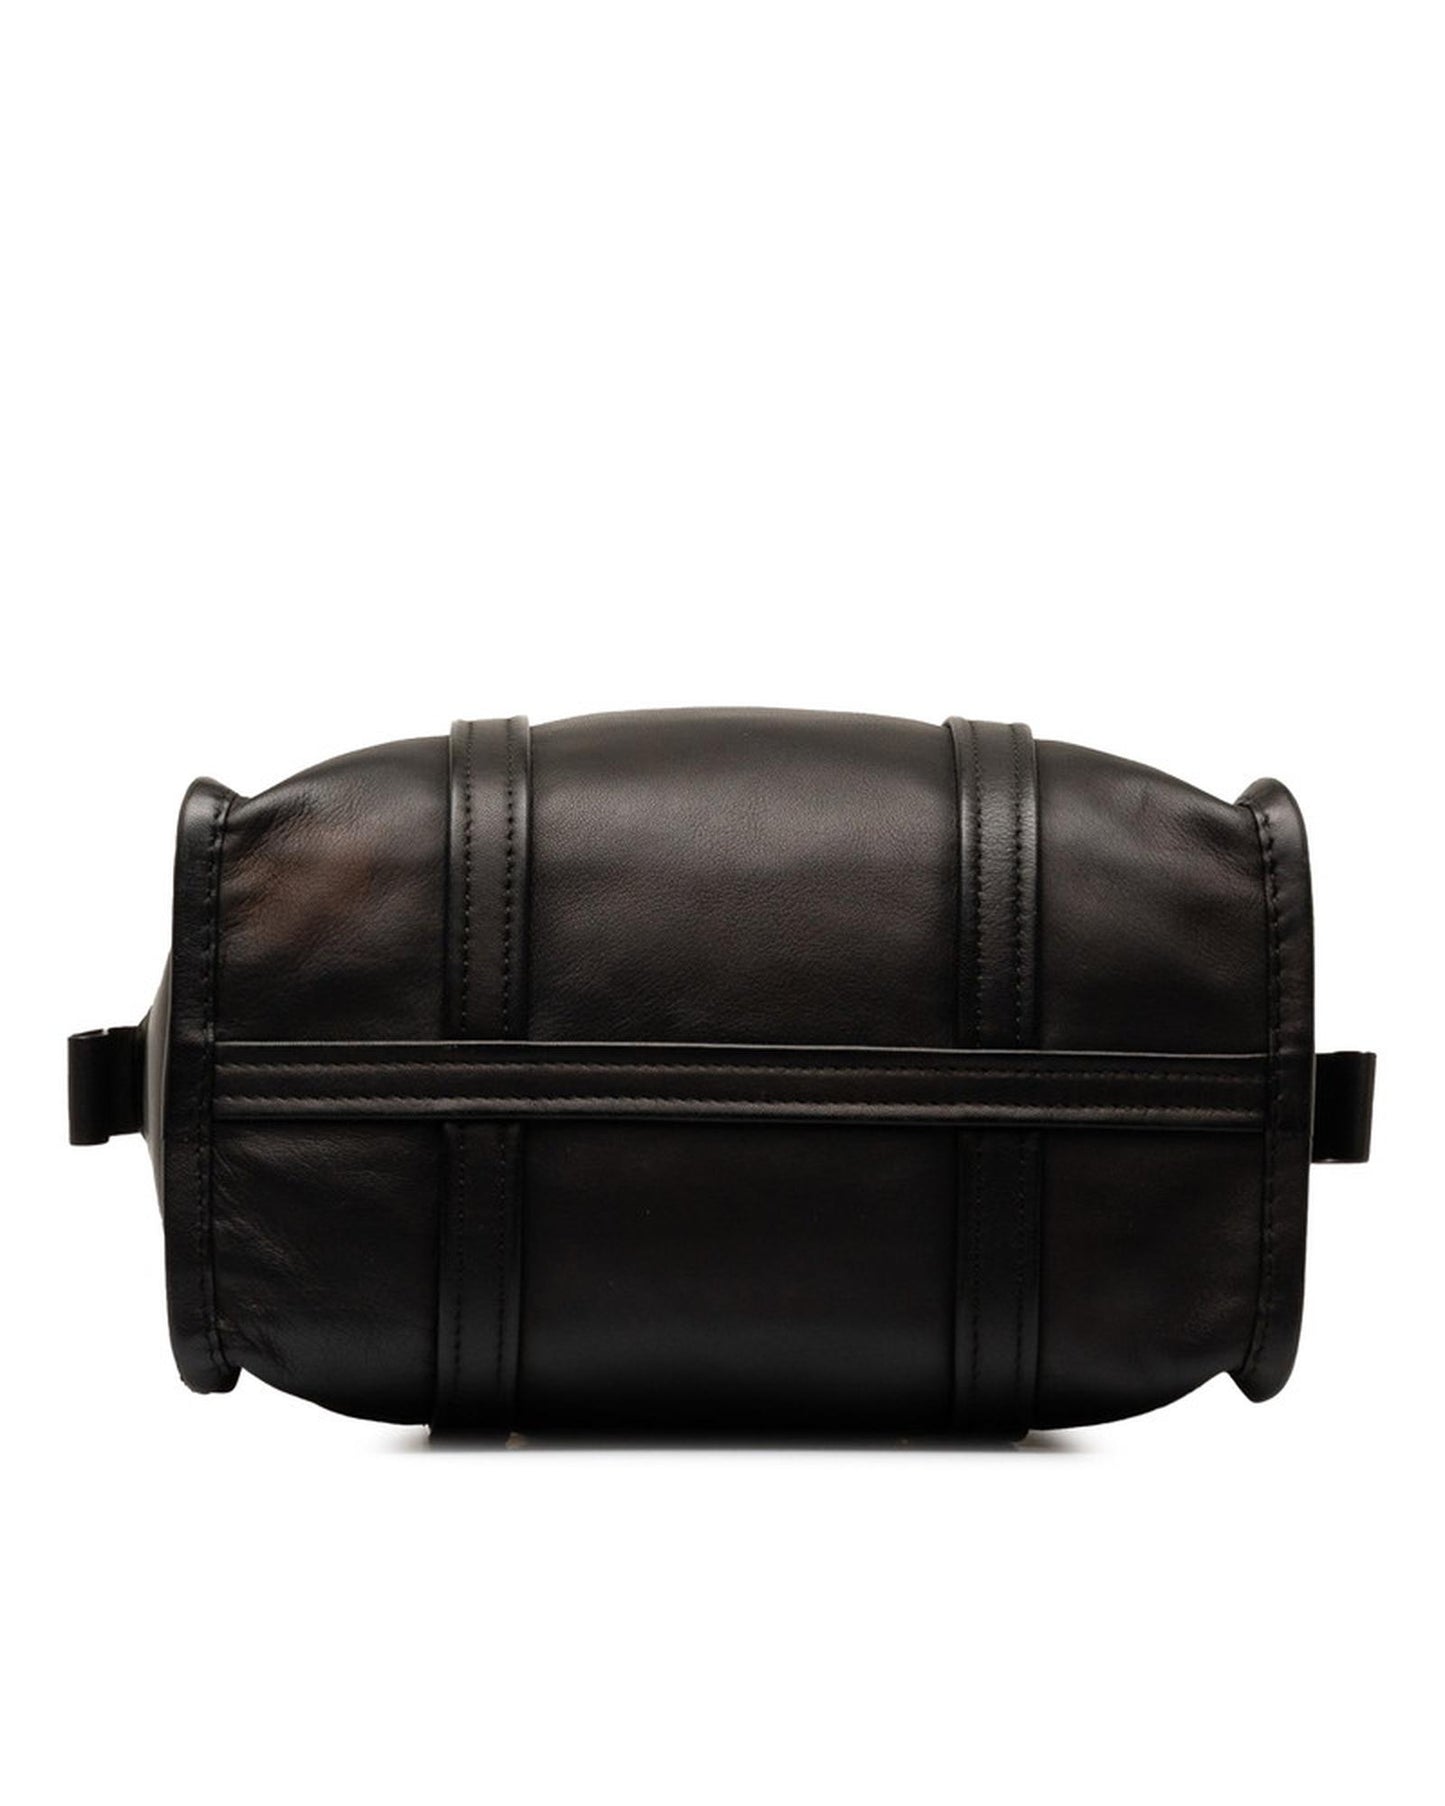 Balenciaga Women's Black Leather Shopper Tote Bag - Excellent Condition in Black